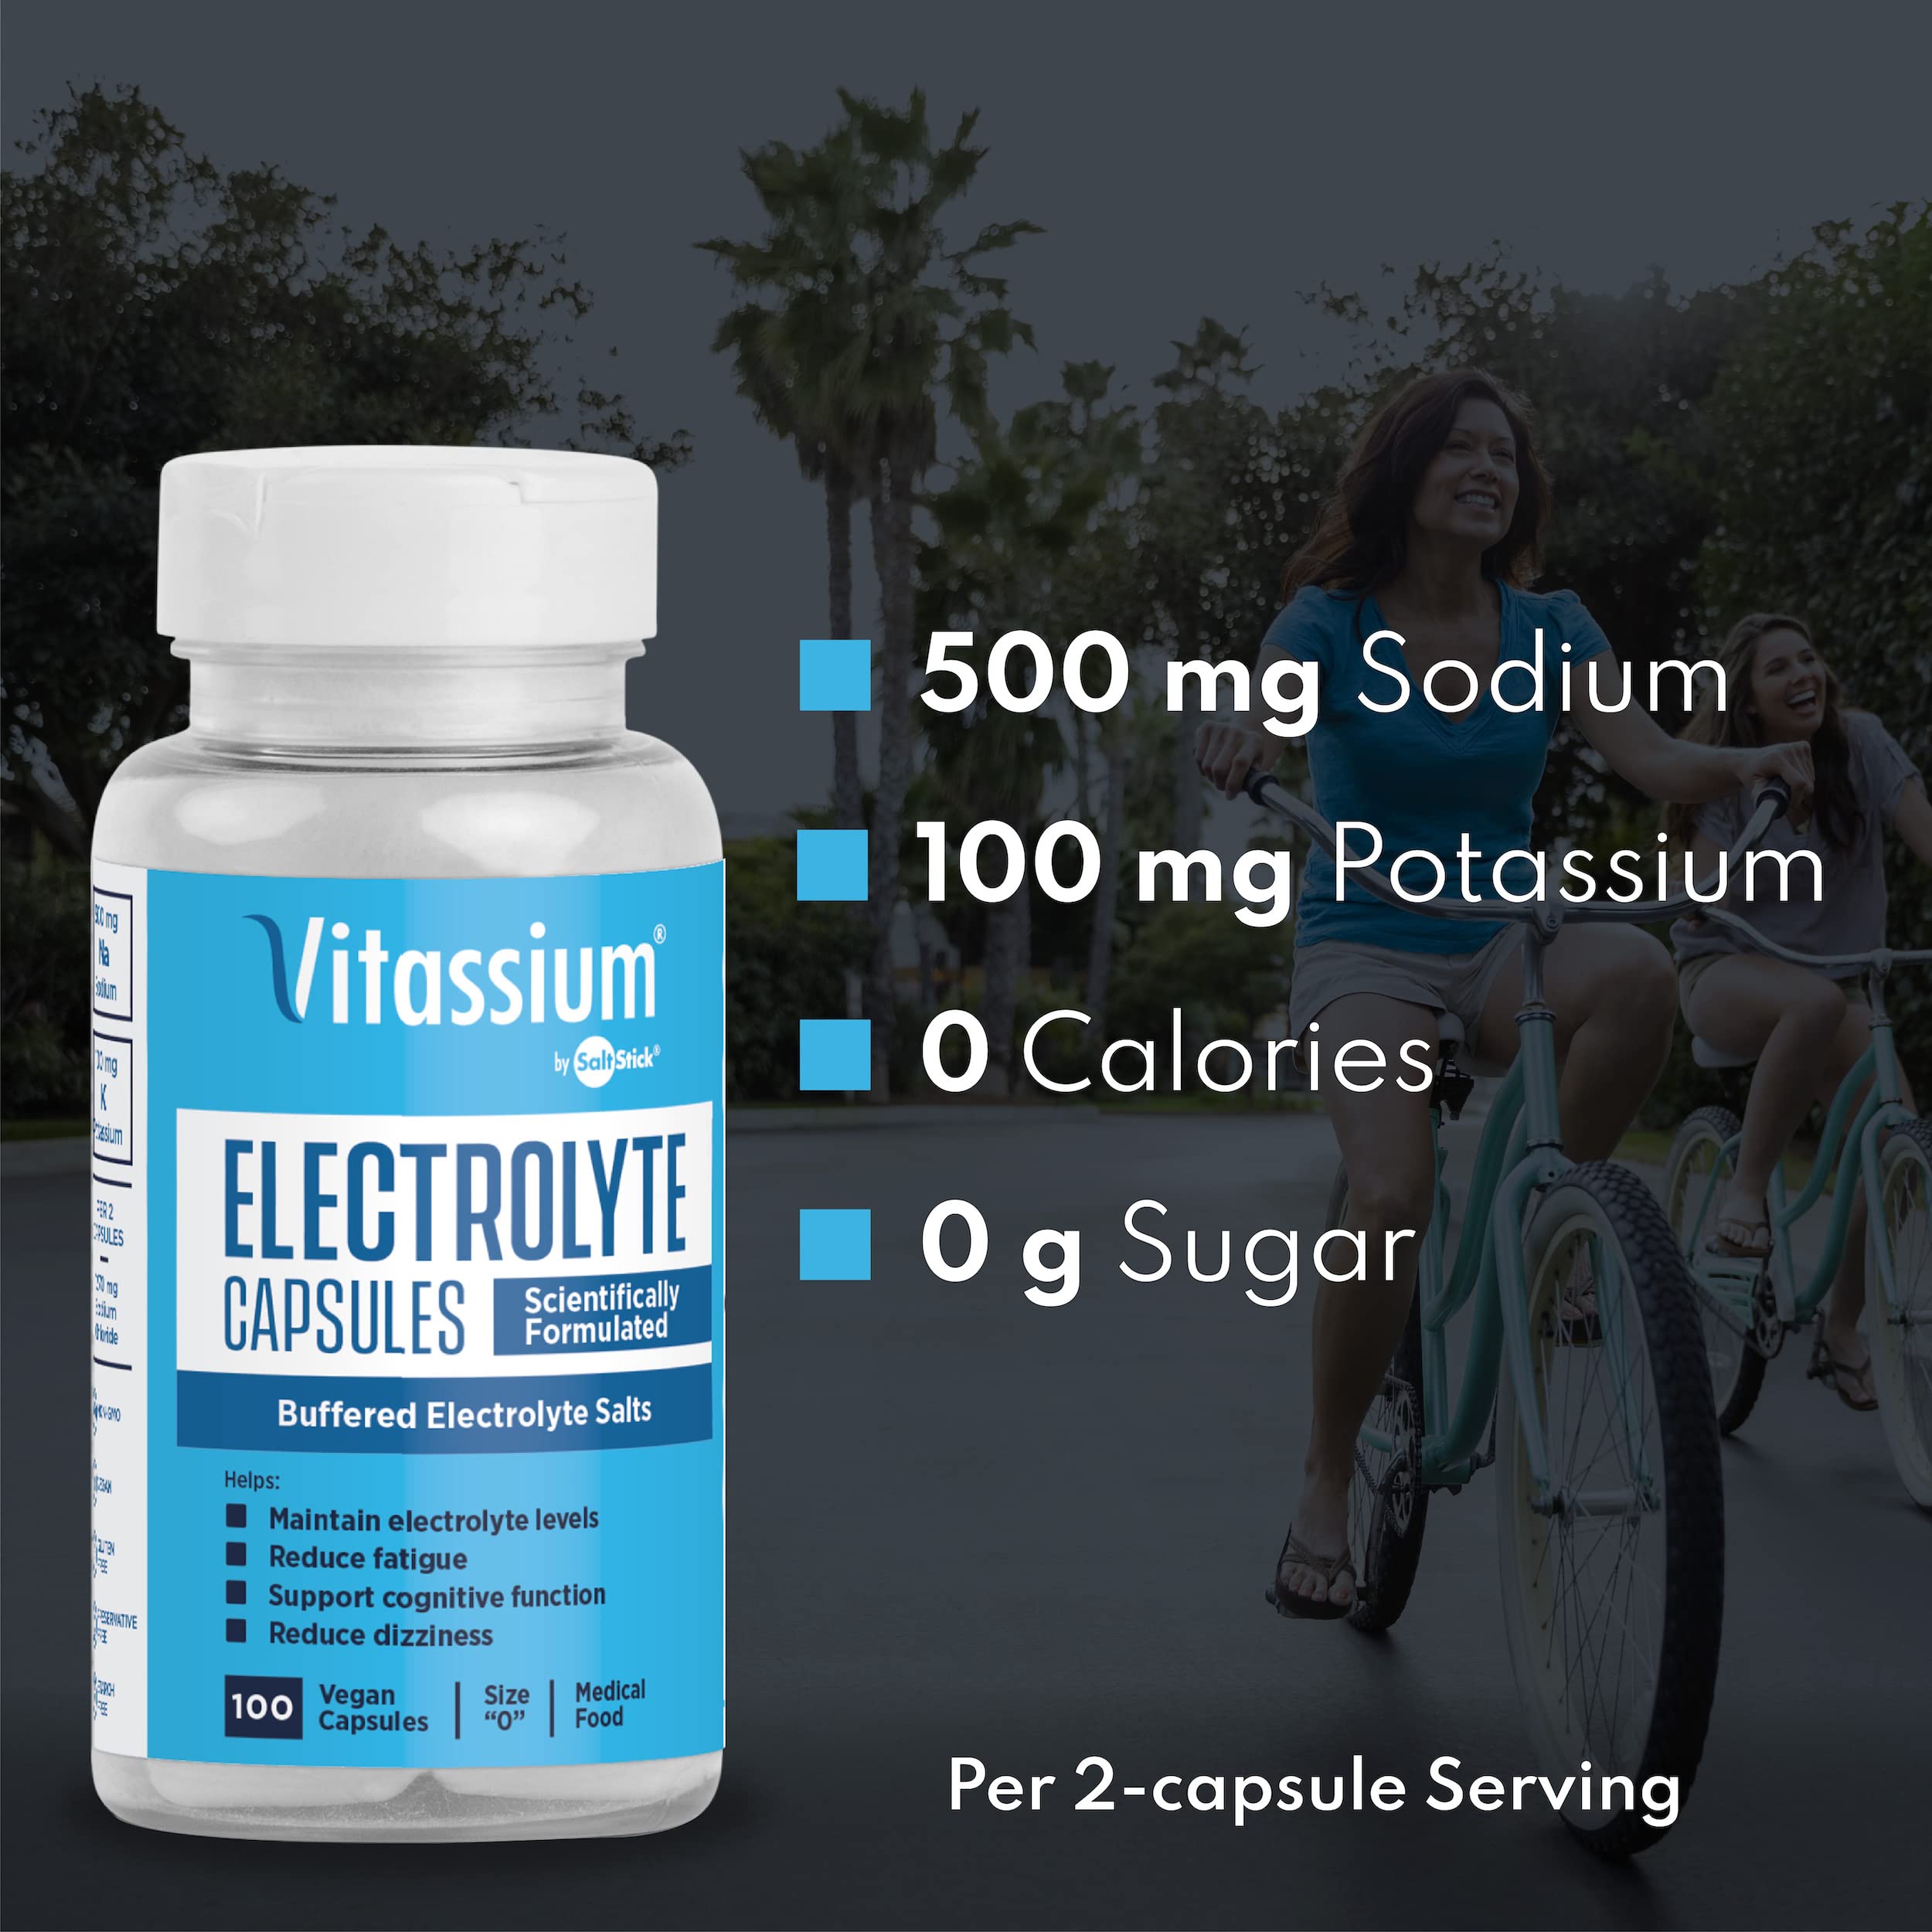 Vitassium Capsules - Daily Salt Pills for Dysautonomia Management (500mg Sodium & 100mg Potassium) - Non-GMO, Unsweetened Electrolytes, Vegan, Preservative & Allergen Free - 100 Capsules